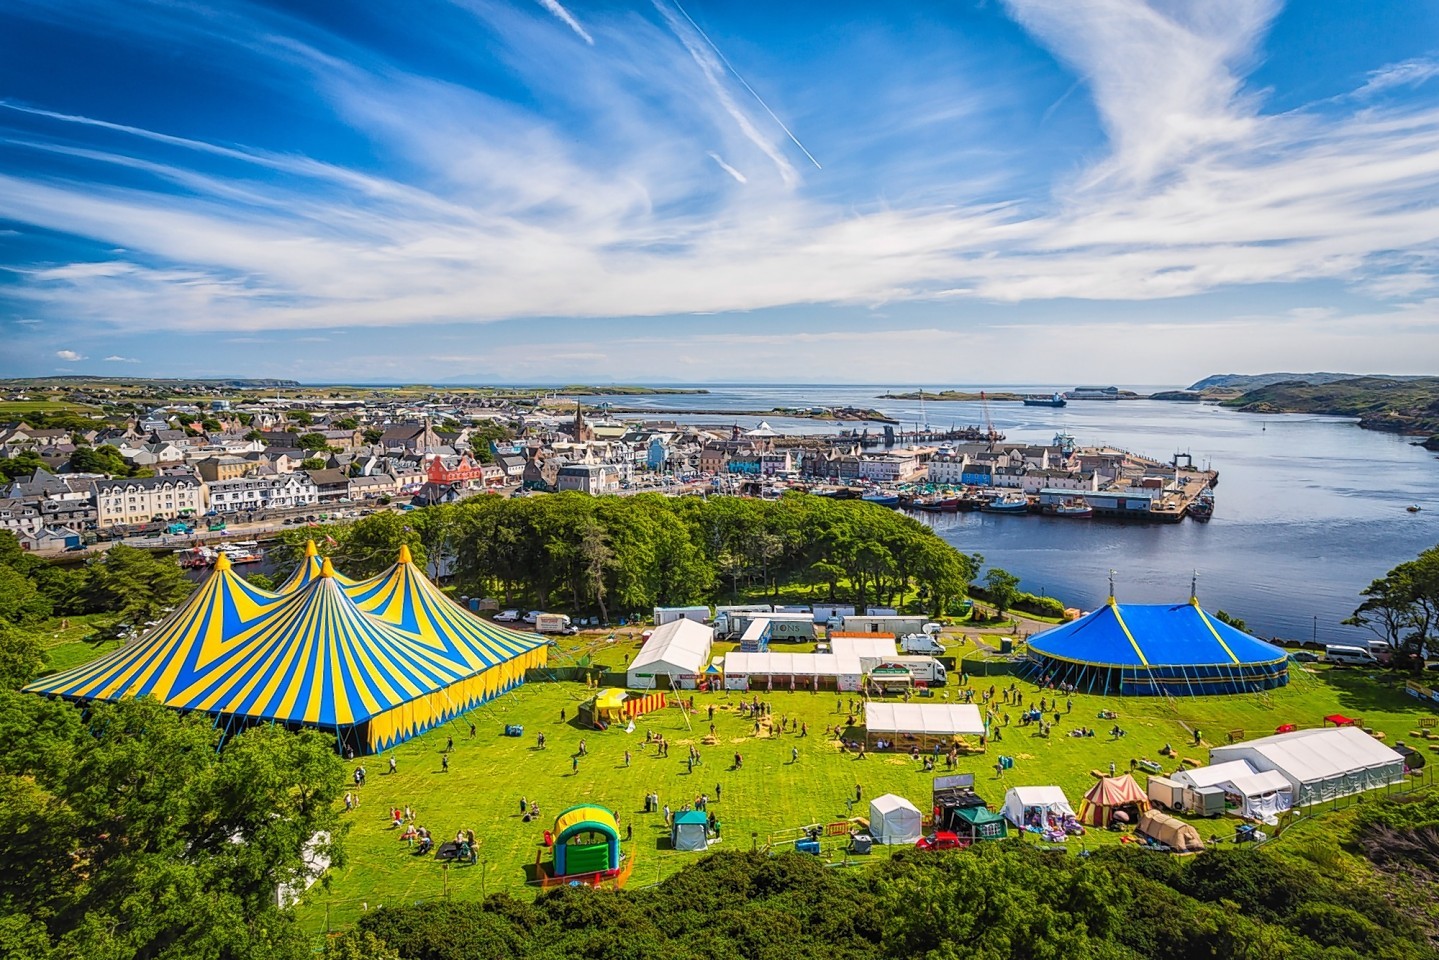 The Hebridean Celtic Festival